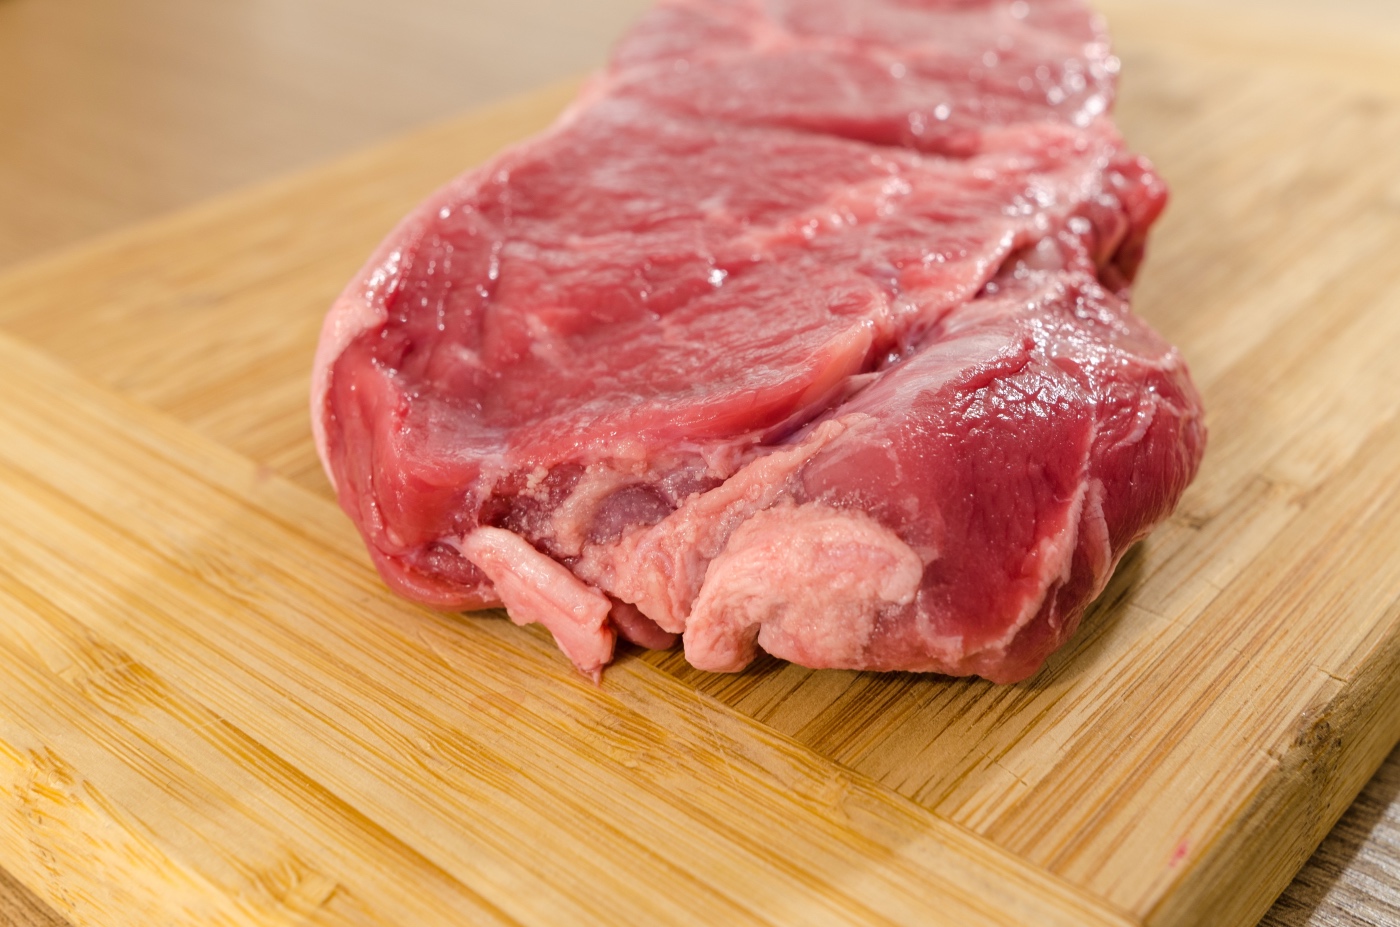 raw steak before simple garlic steak marinade is added pop shop america